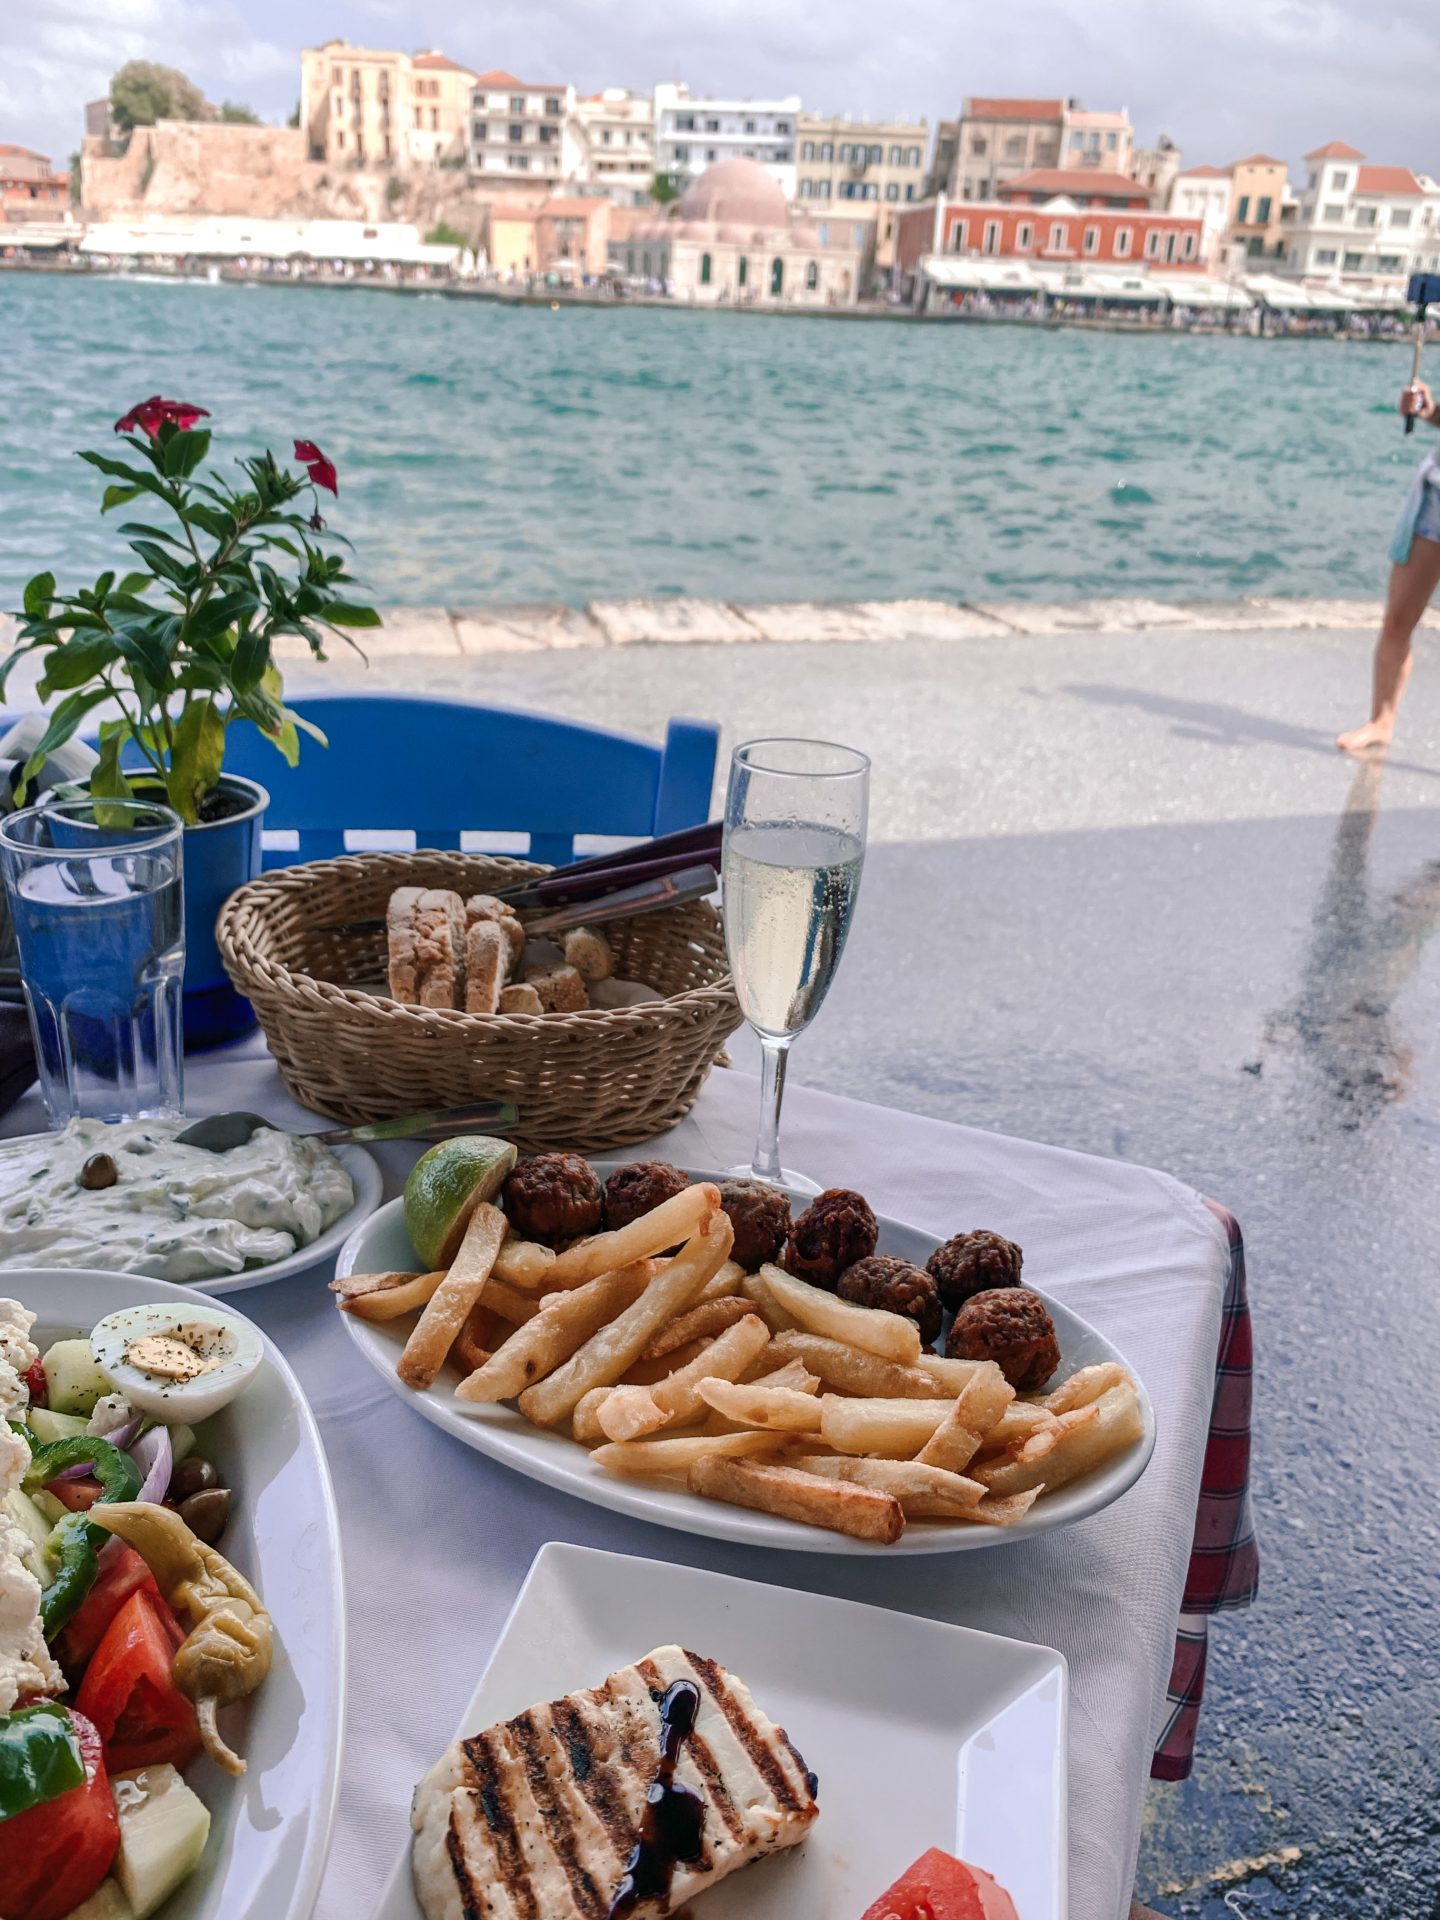 Chania’s Venetian Harbour, Crete Greece, Amphora restaurant